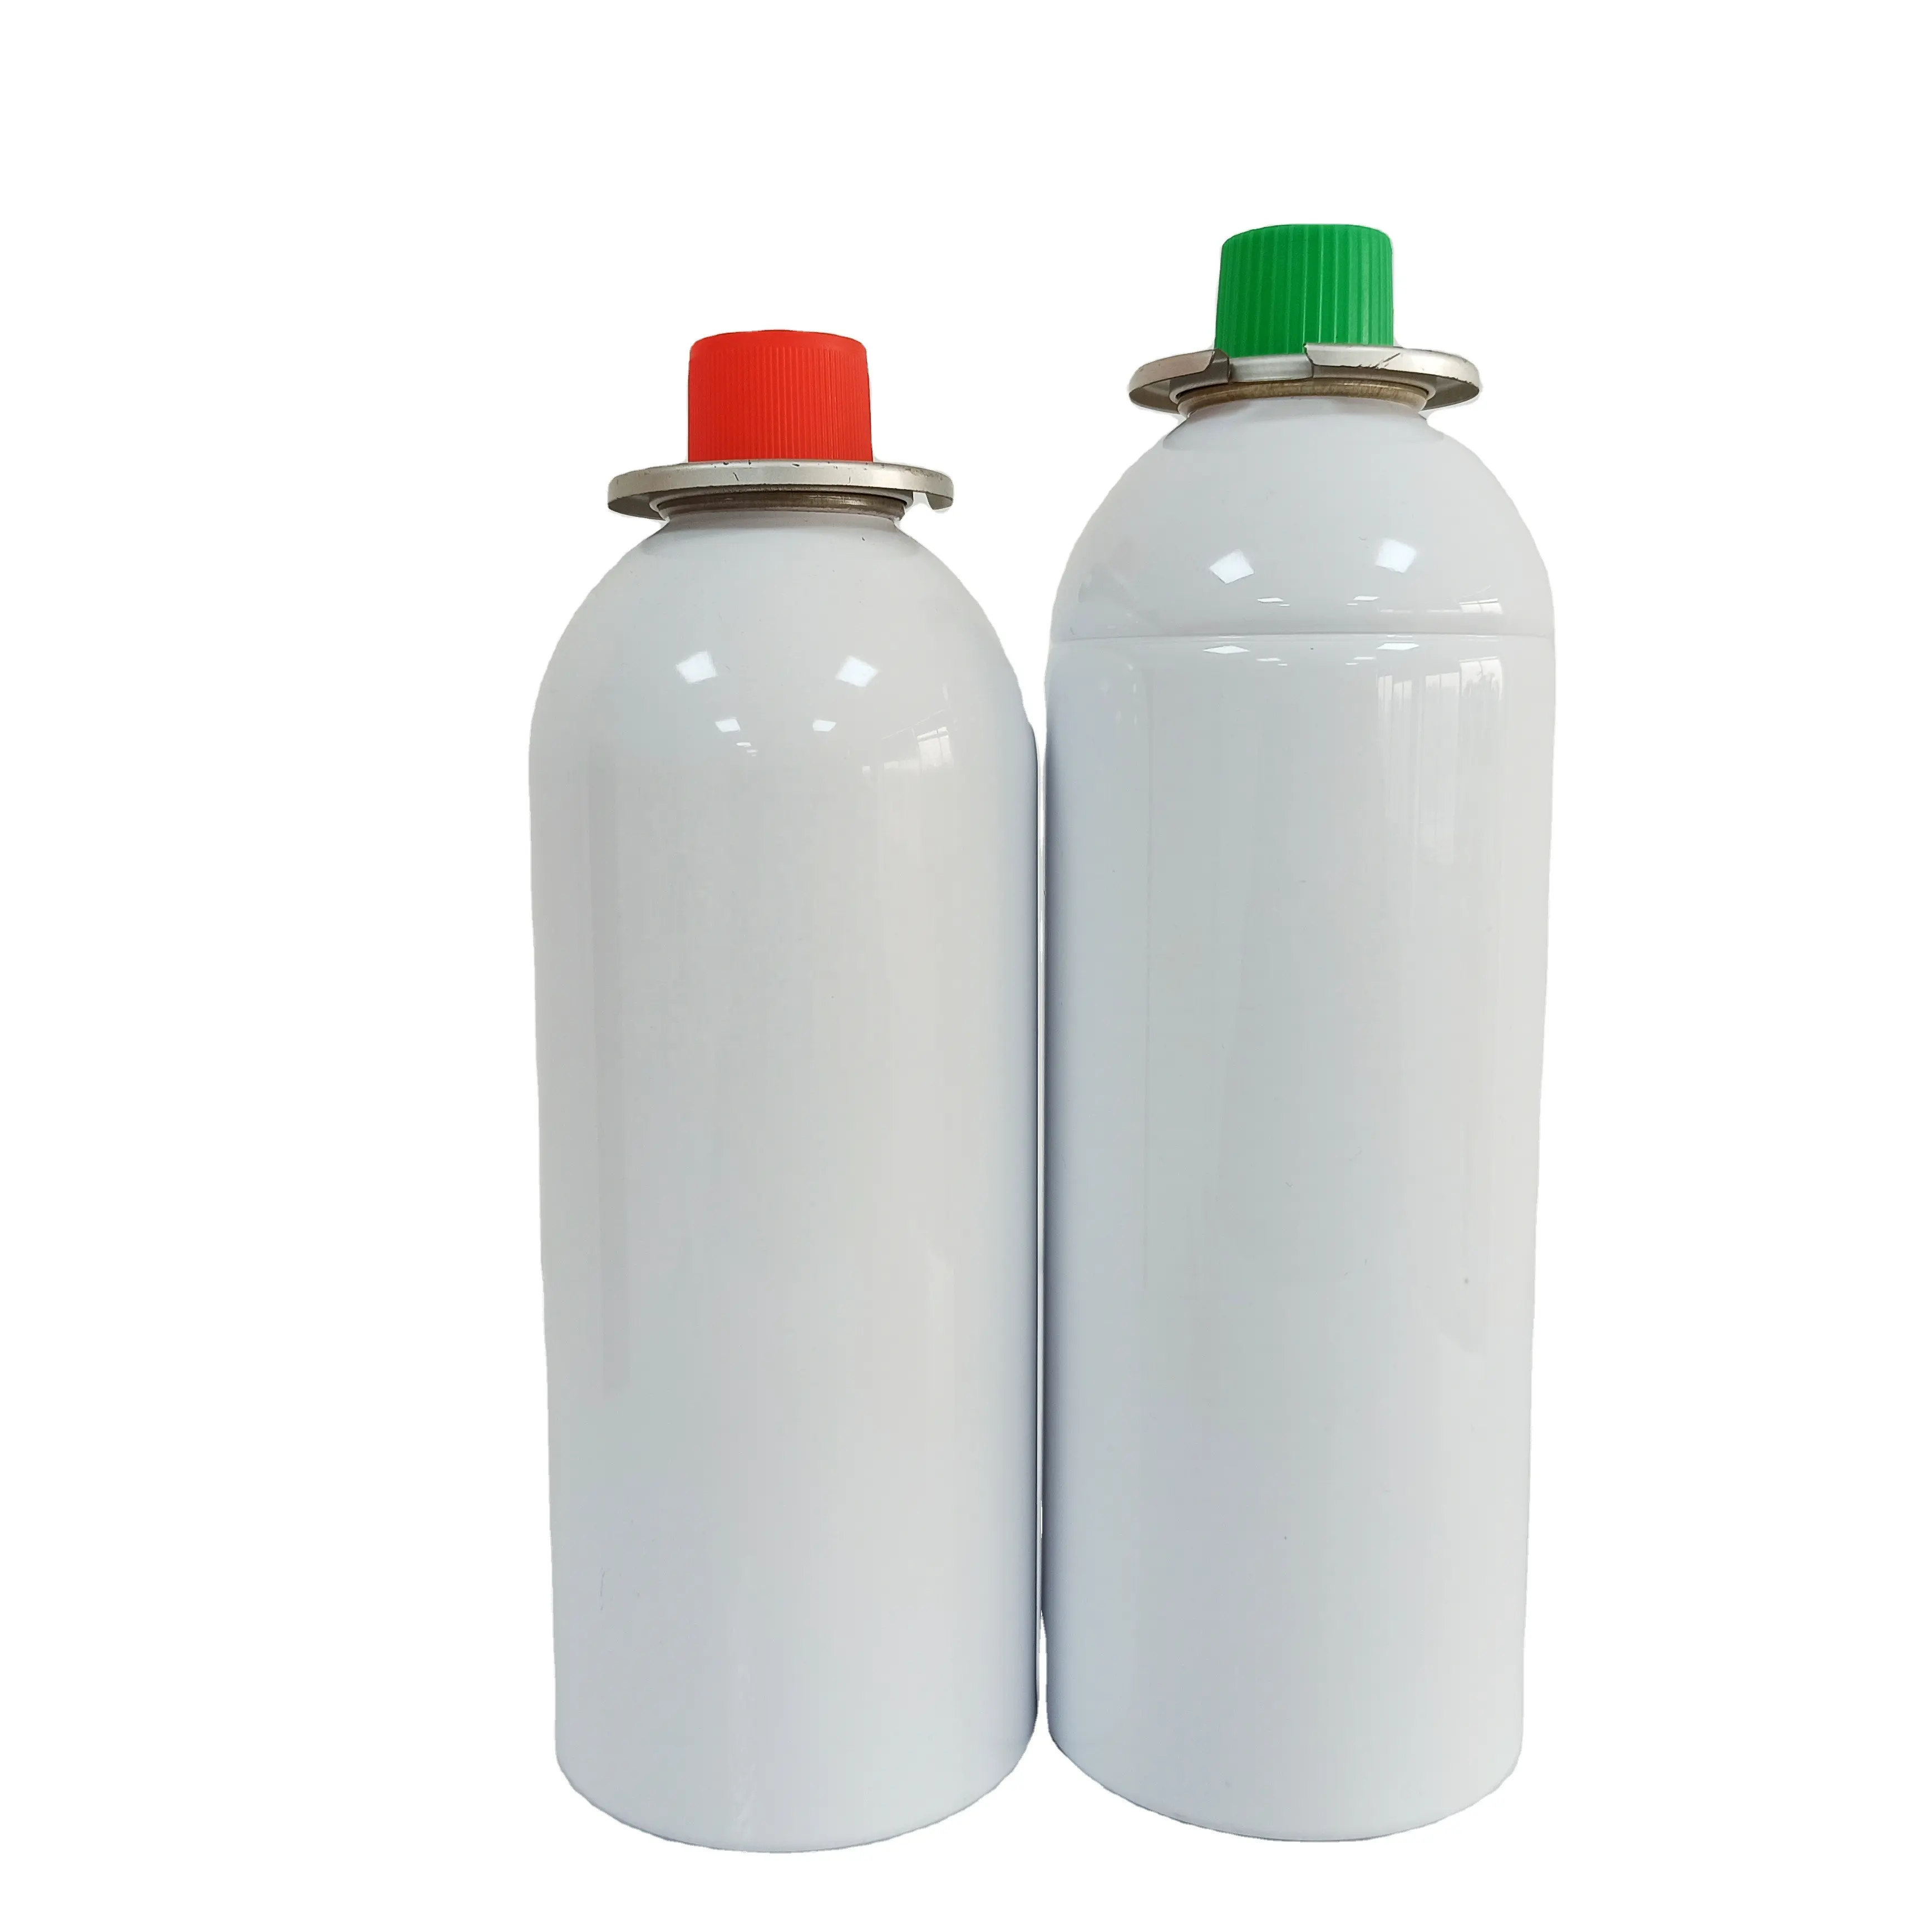 butane gas can aluminium alloy gas can butane emptyempty canister butane gas canister